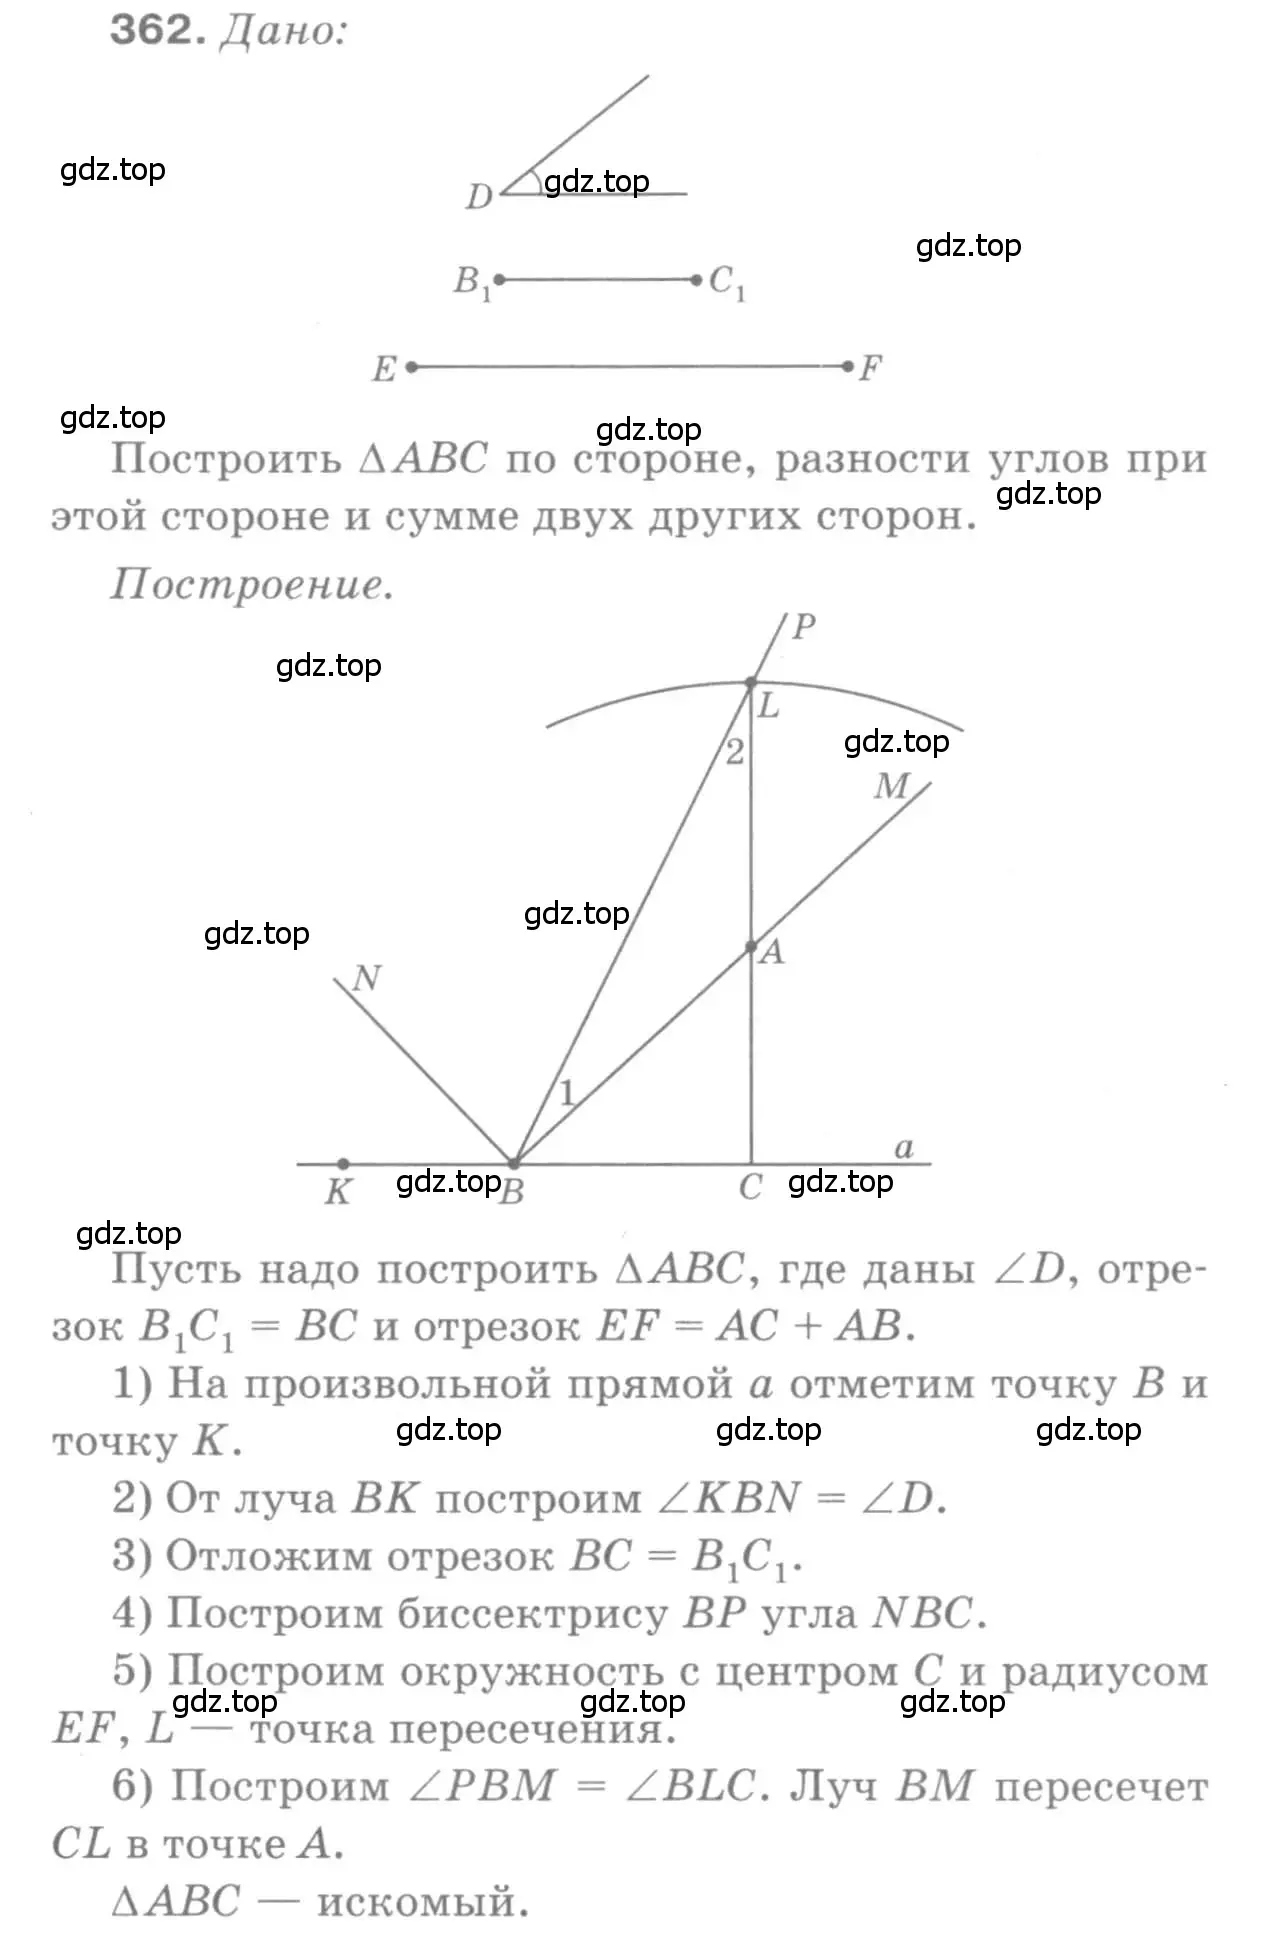 Решение 9. номер 362 (страница 96) гдз по геометрии 7-9 класс Атанасян, Бутузов, учебник